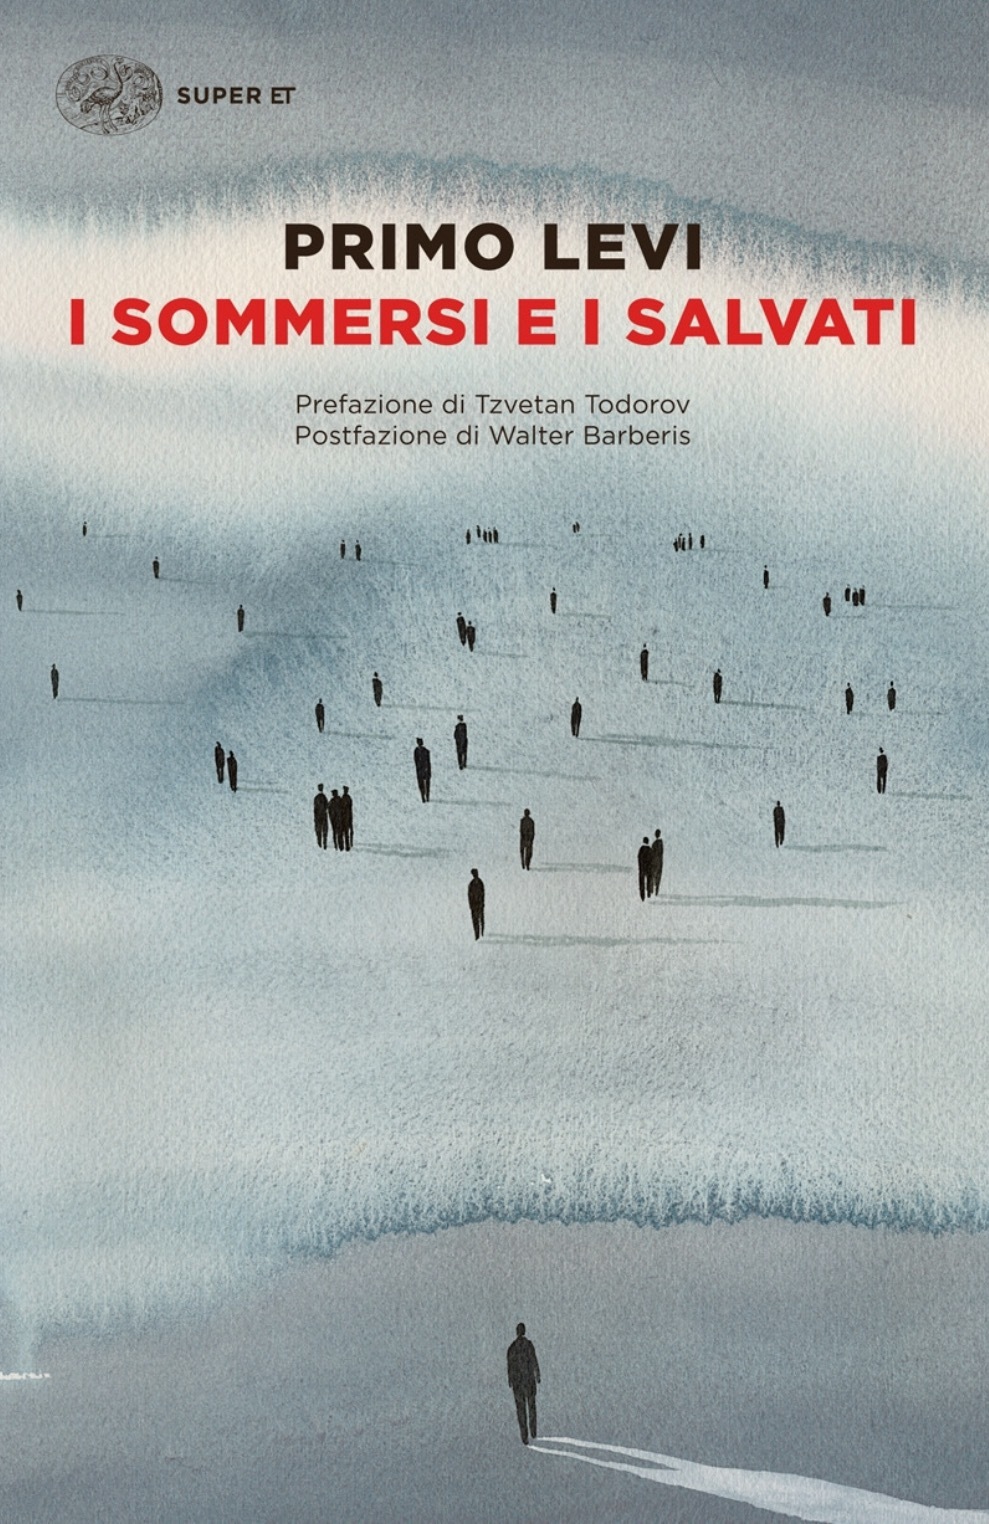 Primo Levi: I sommersi e i salvati (EBook, Italian language, Einaudi)